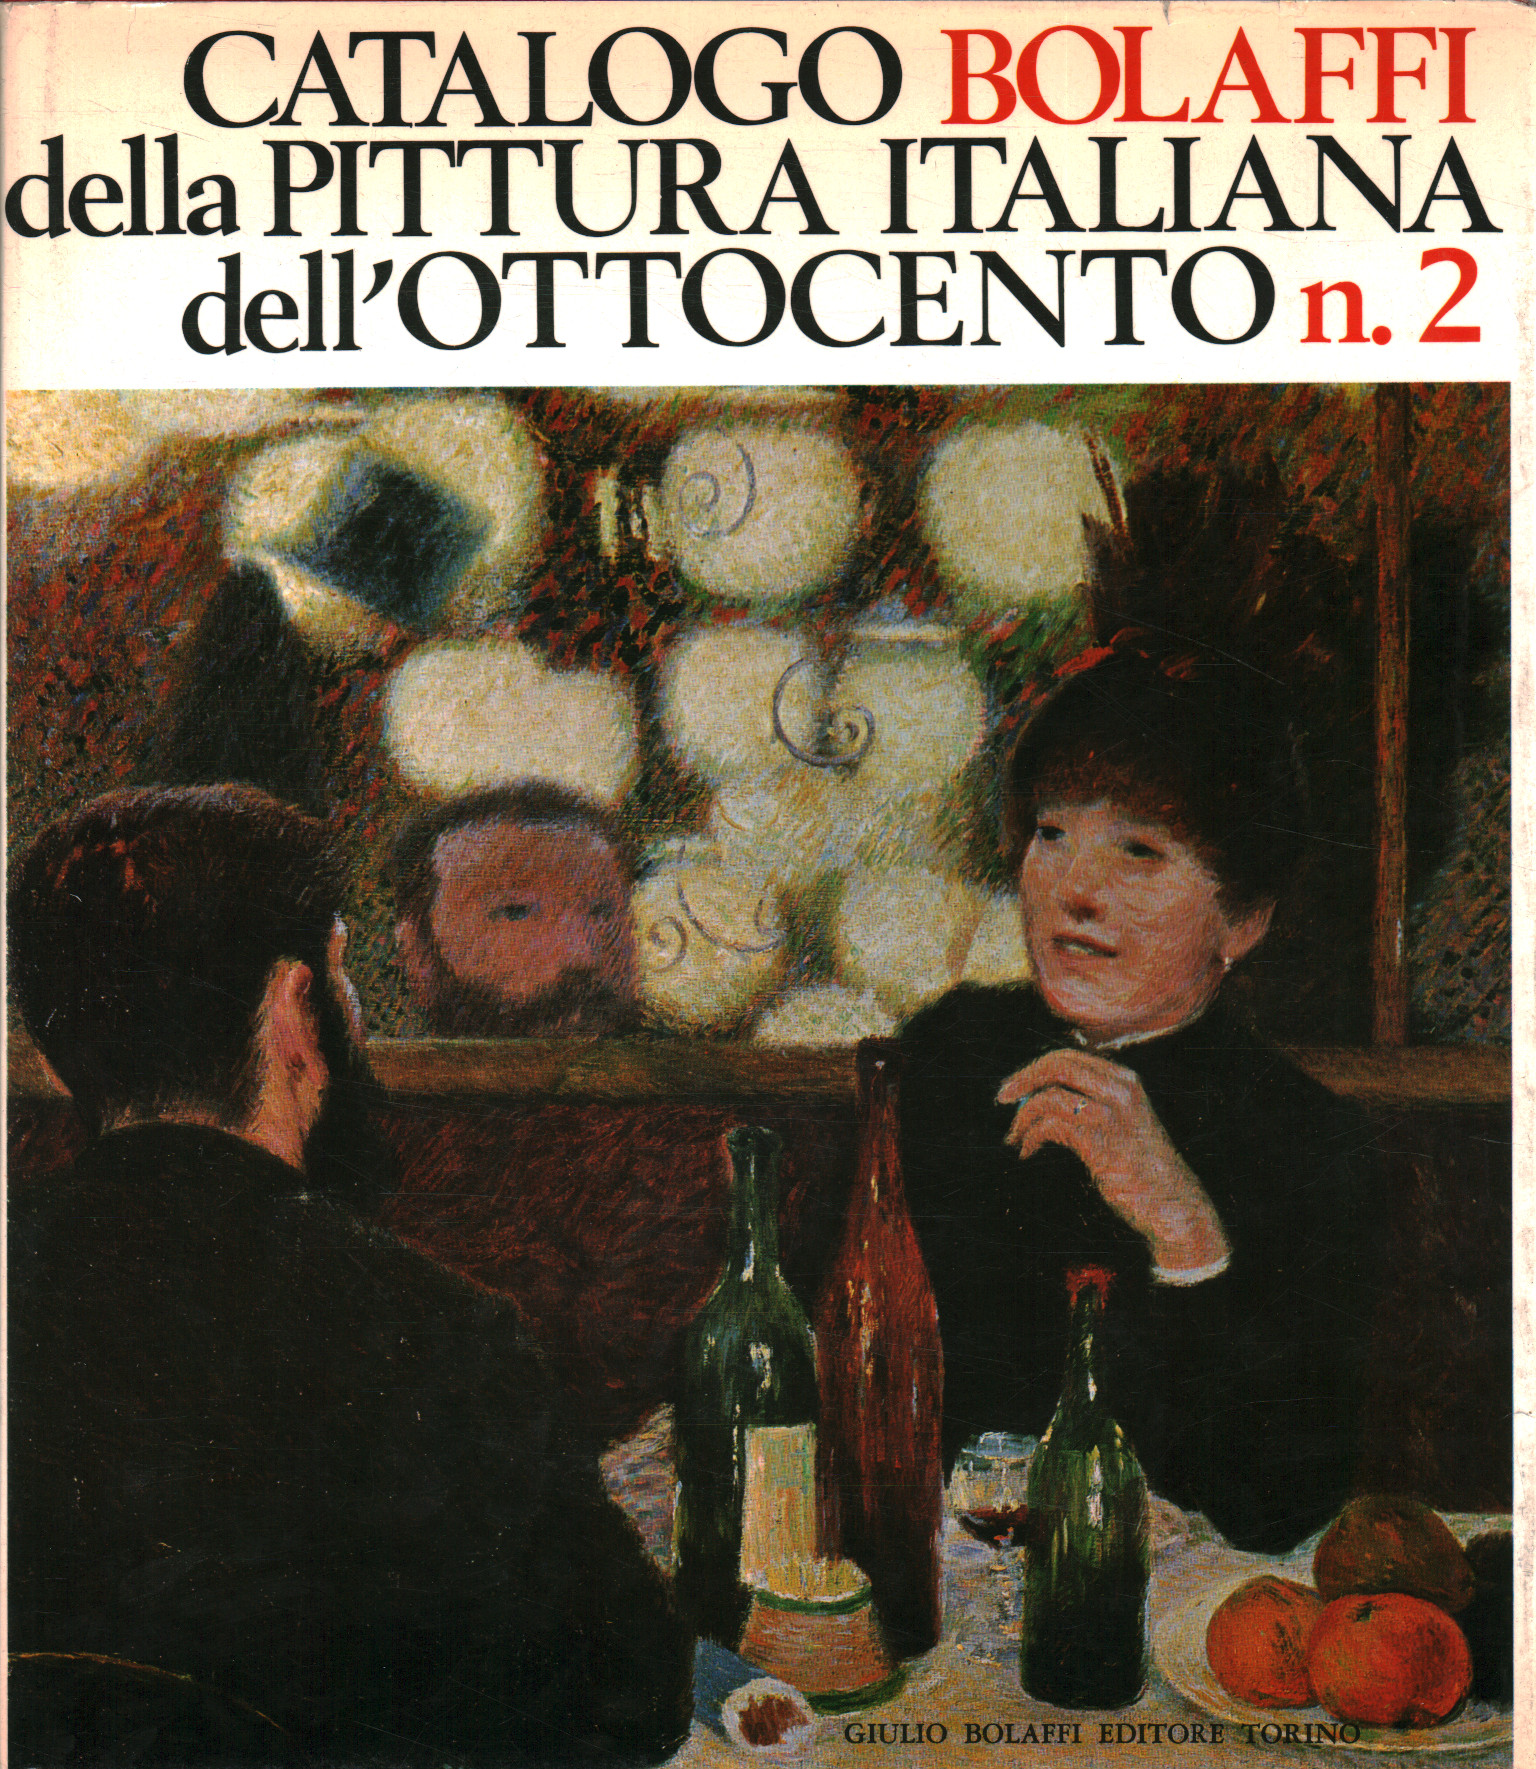 Bolaffi catalog of Italian painting